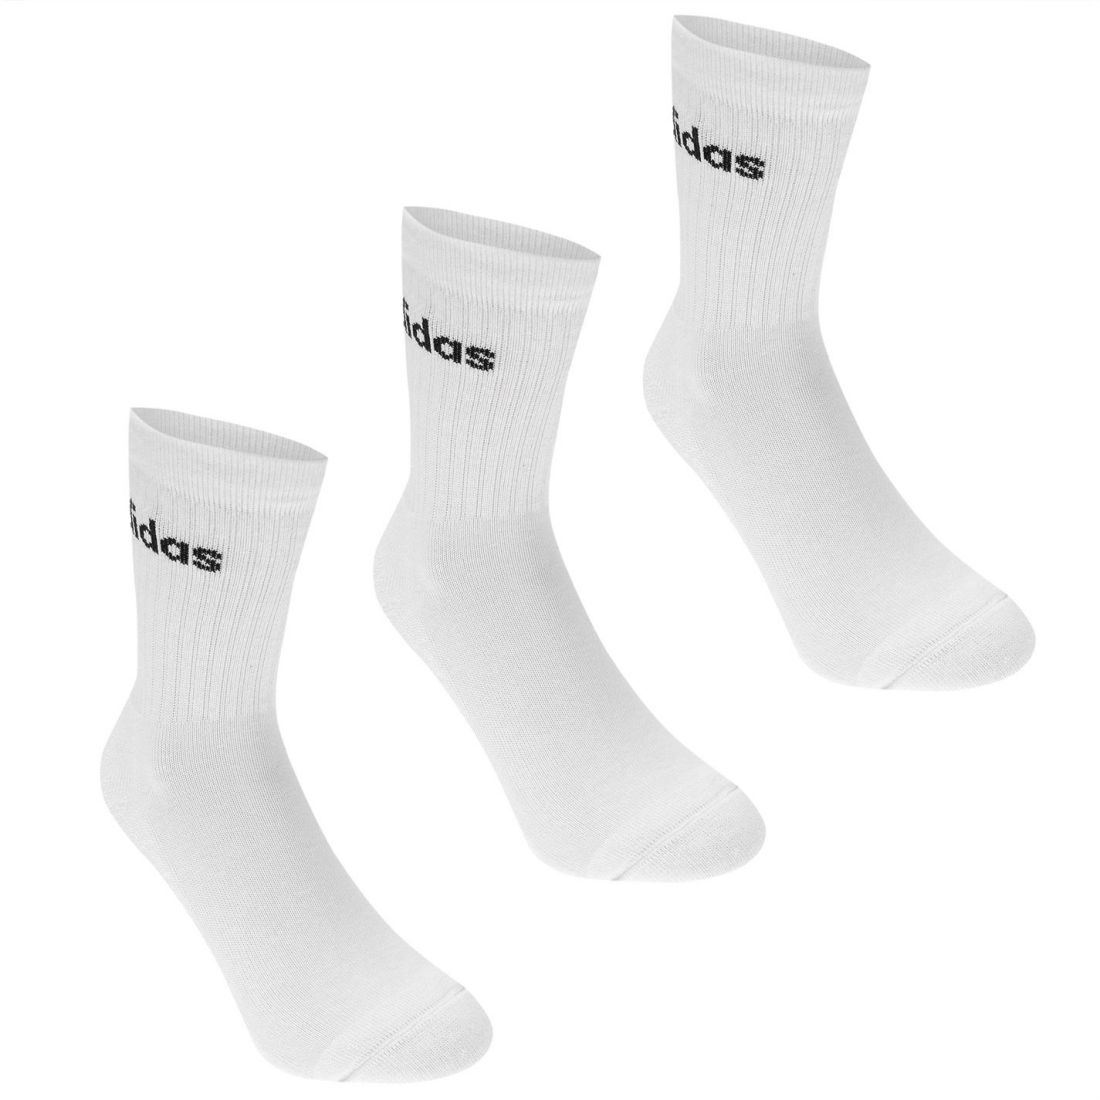 adidas Mens Crew Three Pack Socks | eBay